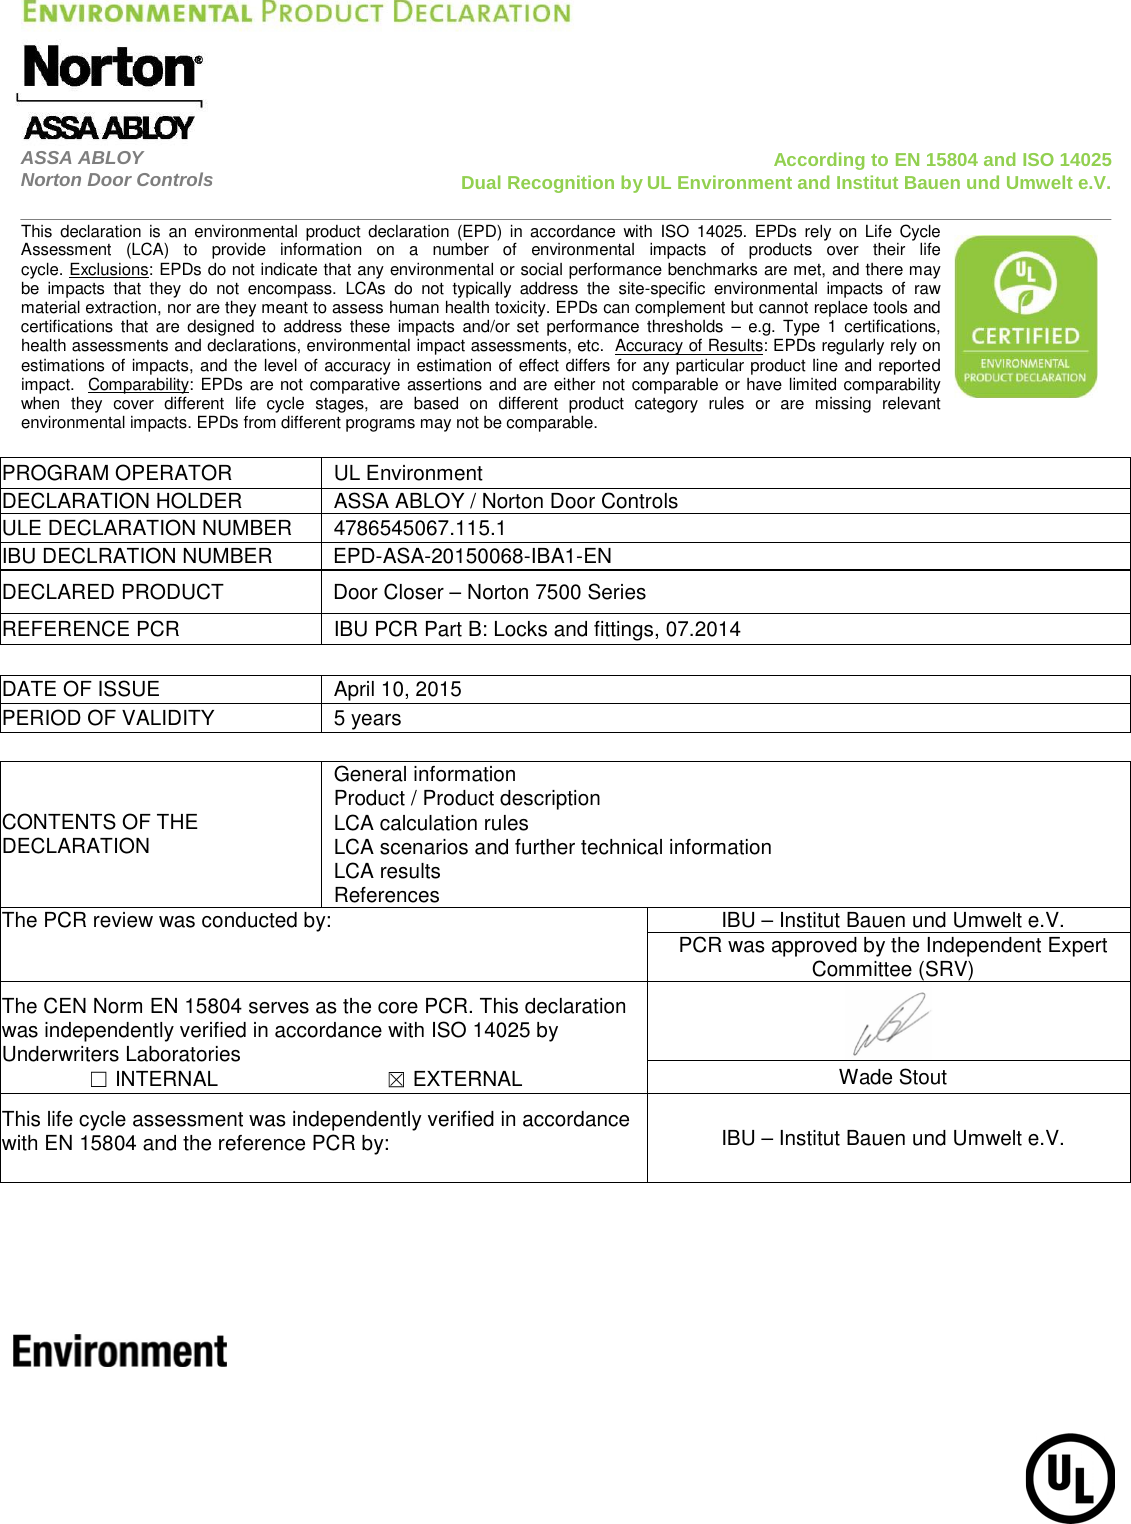 Norton 7500 Series Door Closer Environmental Product Declaration (EPD